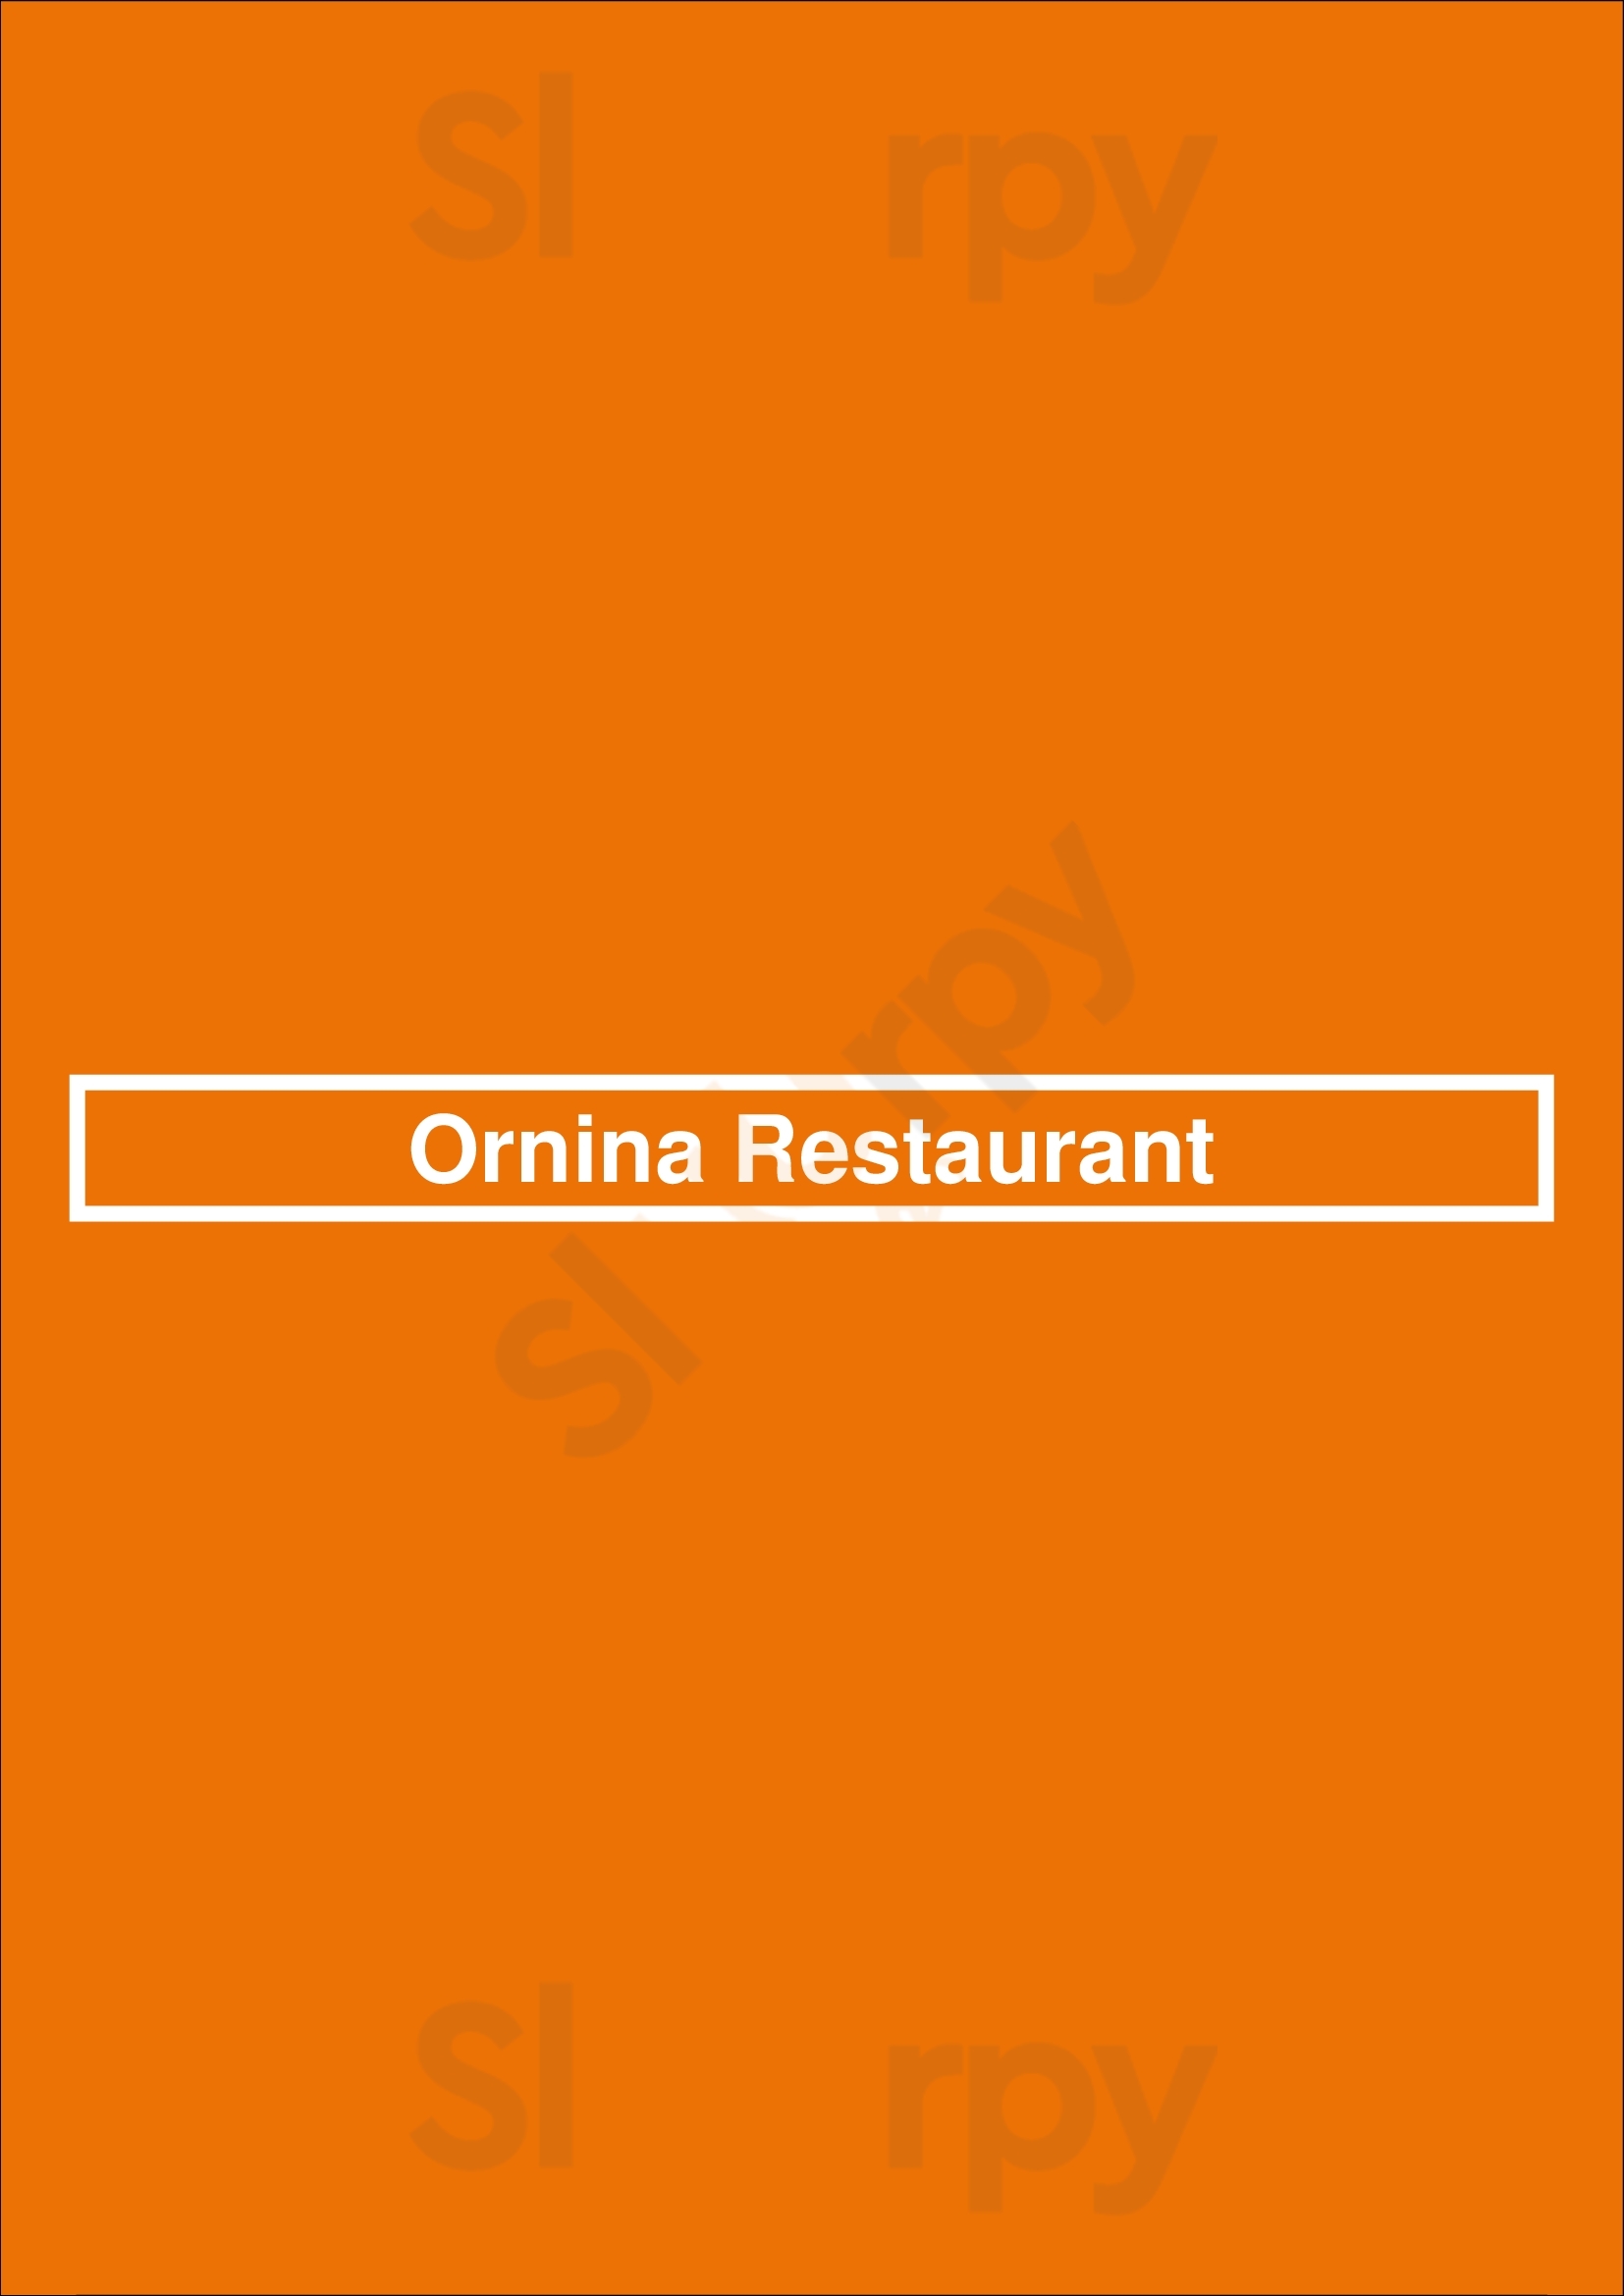 Ornina Restaurant Zaandam Menu - 1